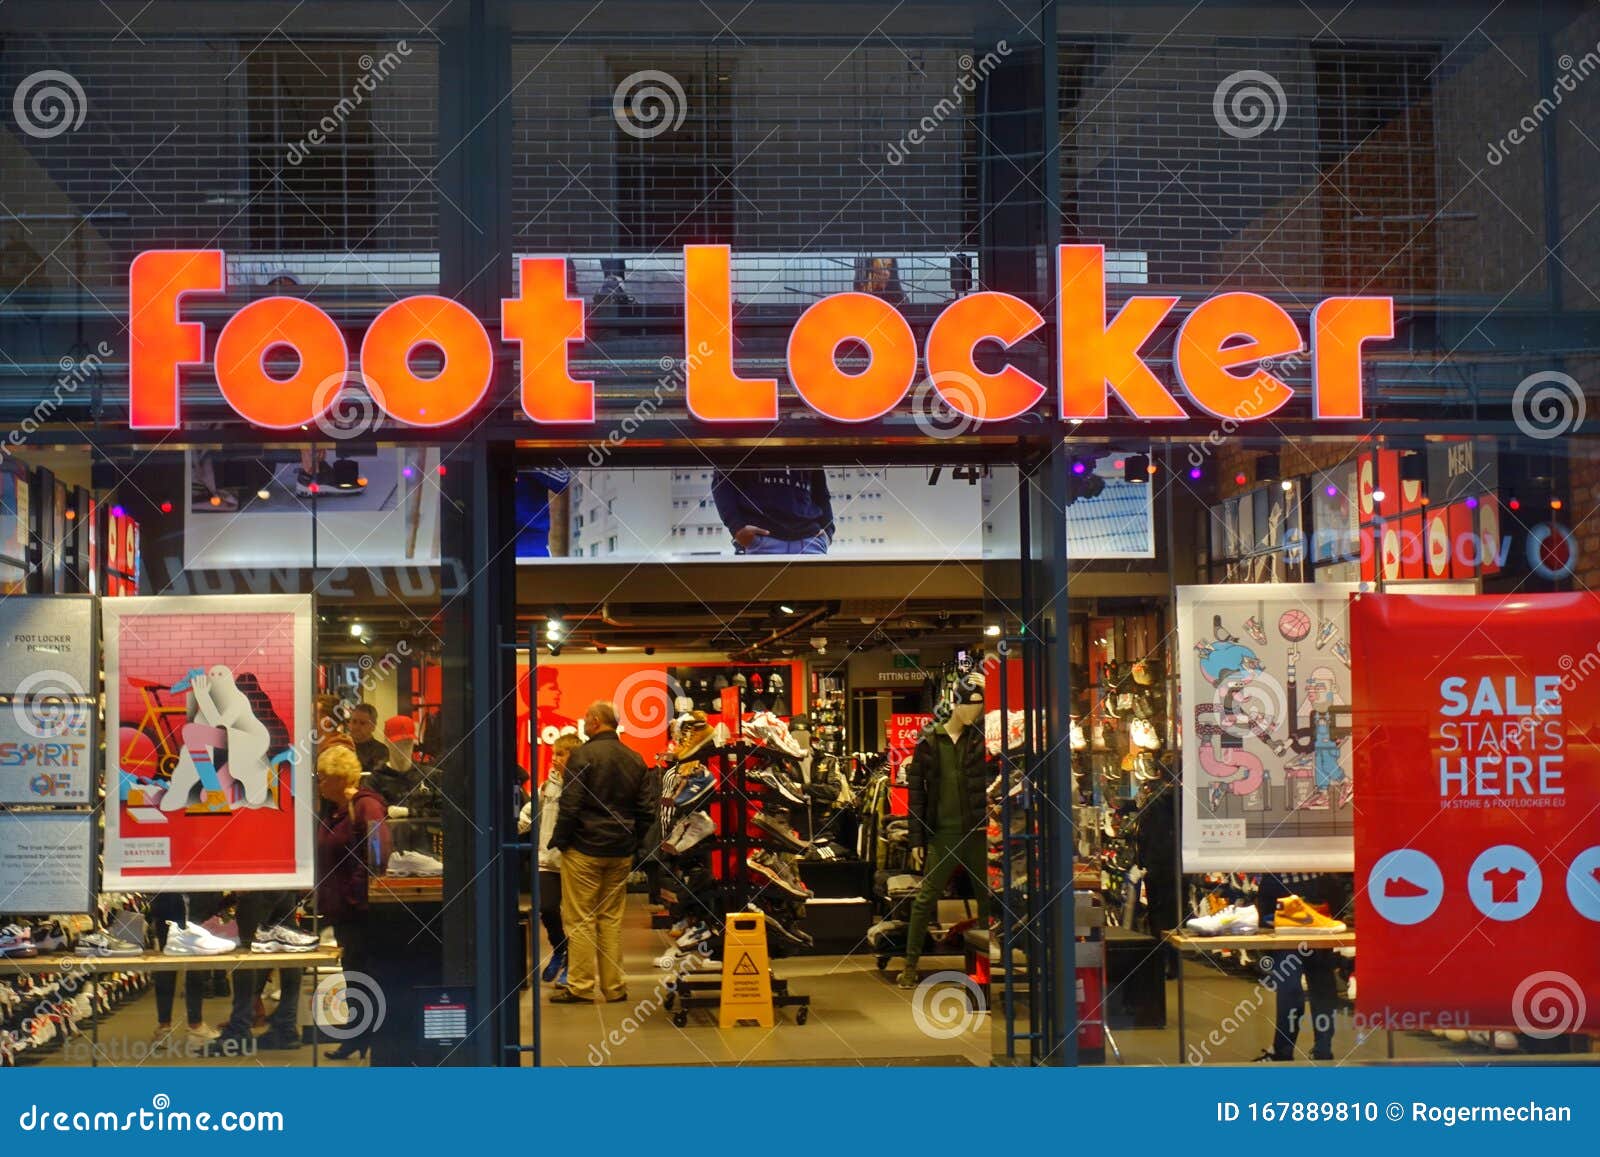 modern high street foot locker shoe shop facade editorial image image of high customers 167889810